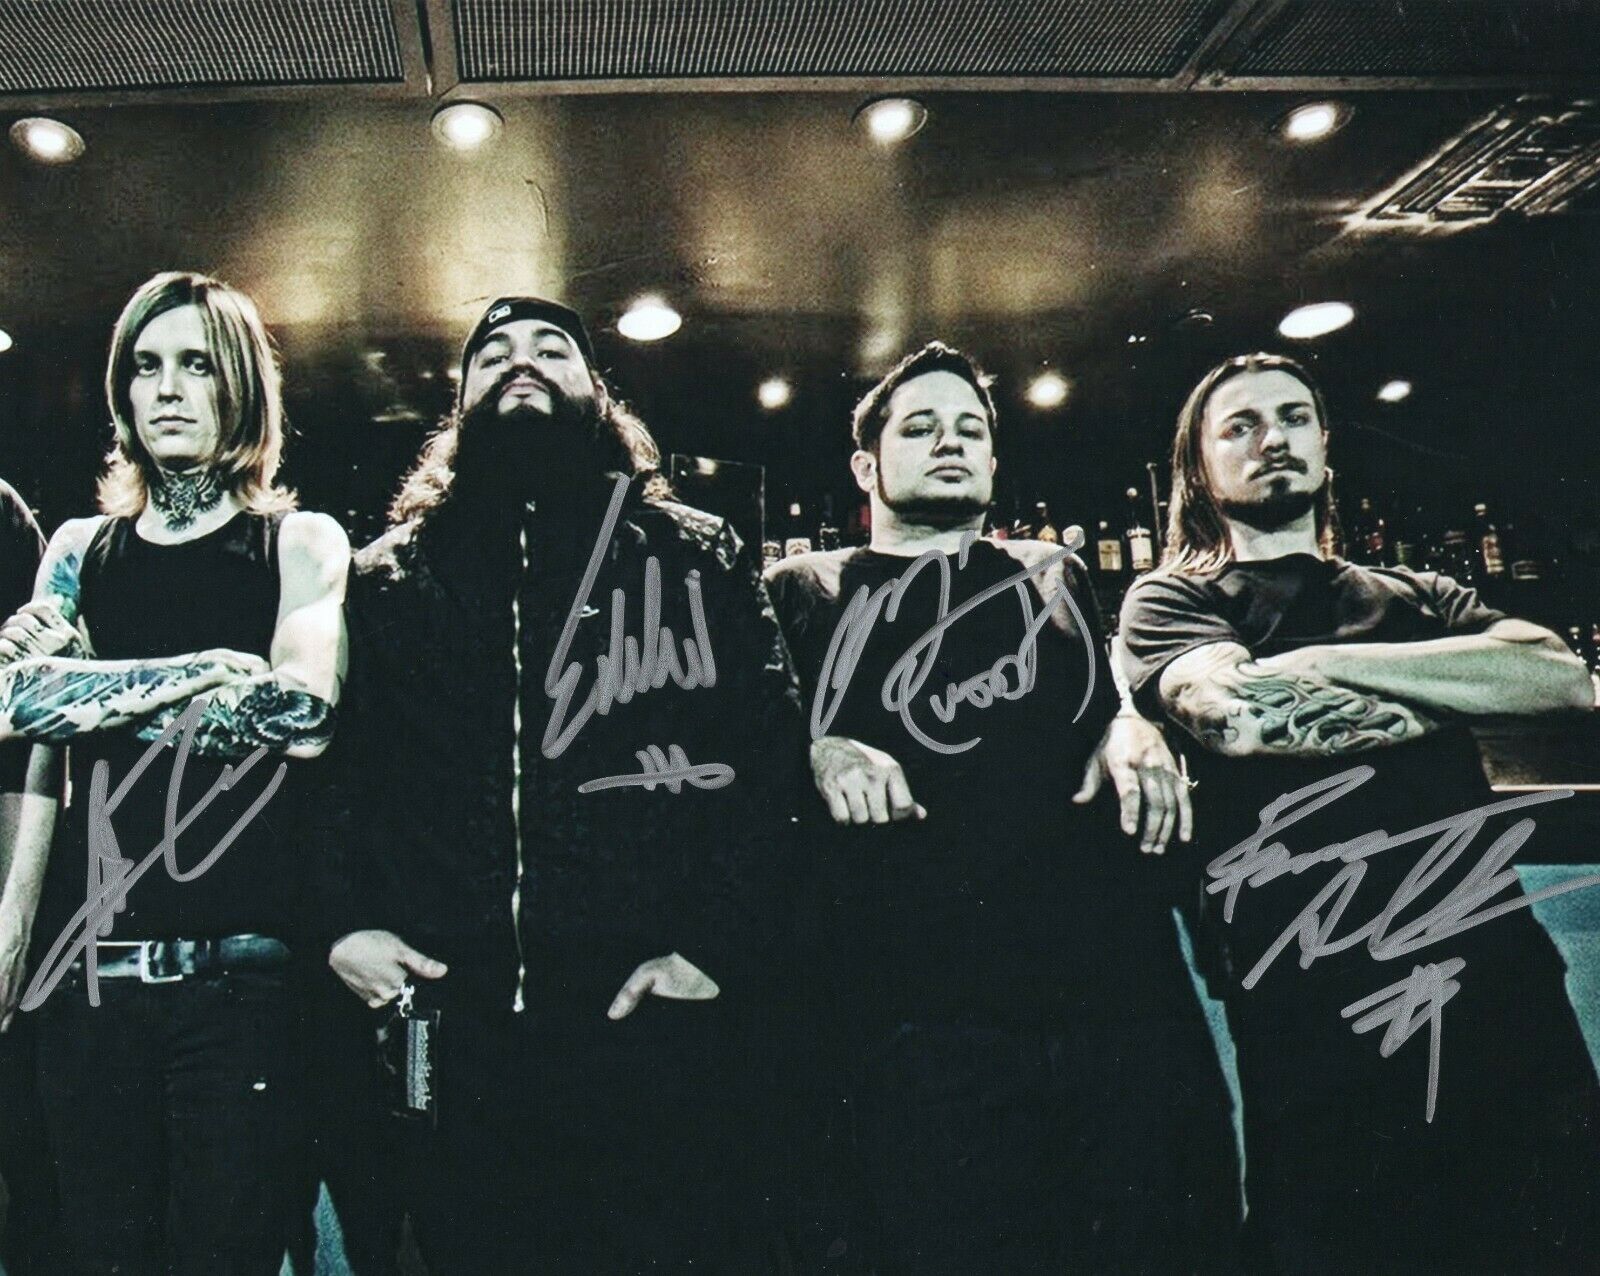 Group Signed 8x10 Photo w/ COA All Shall Perish Band Hate Malice Revenge Collectible Memorabilia